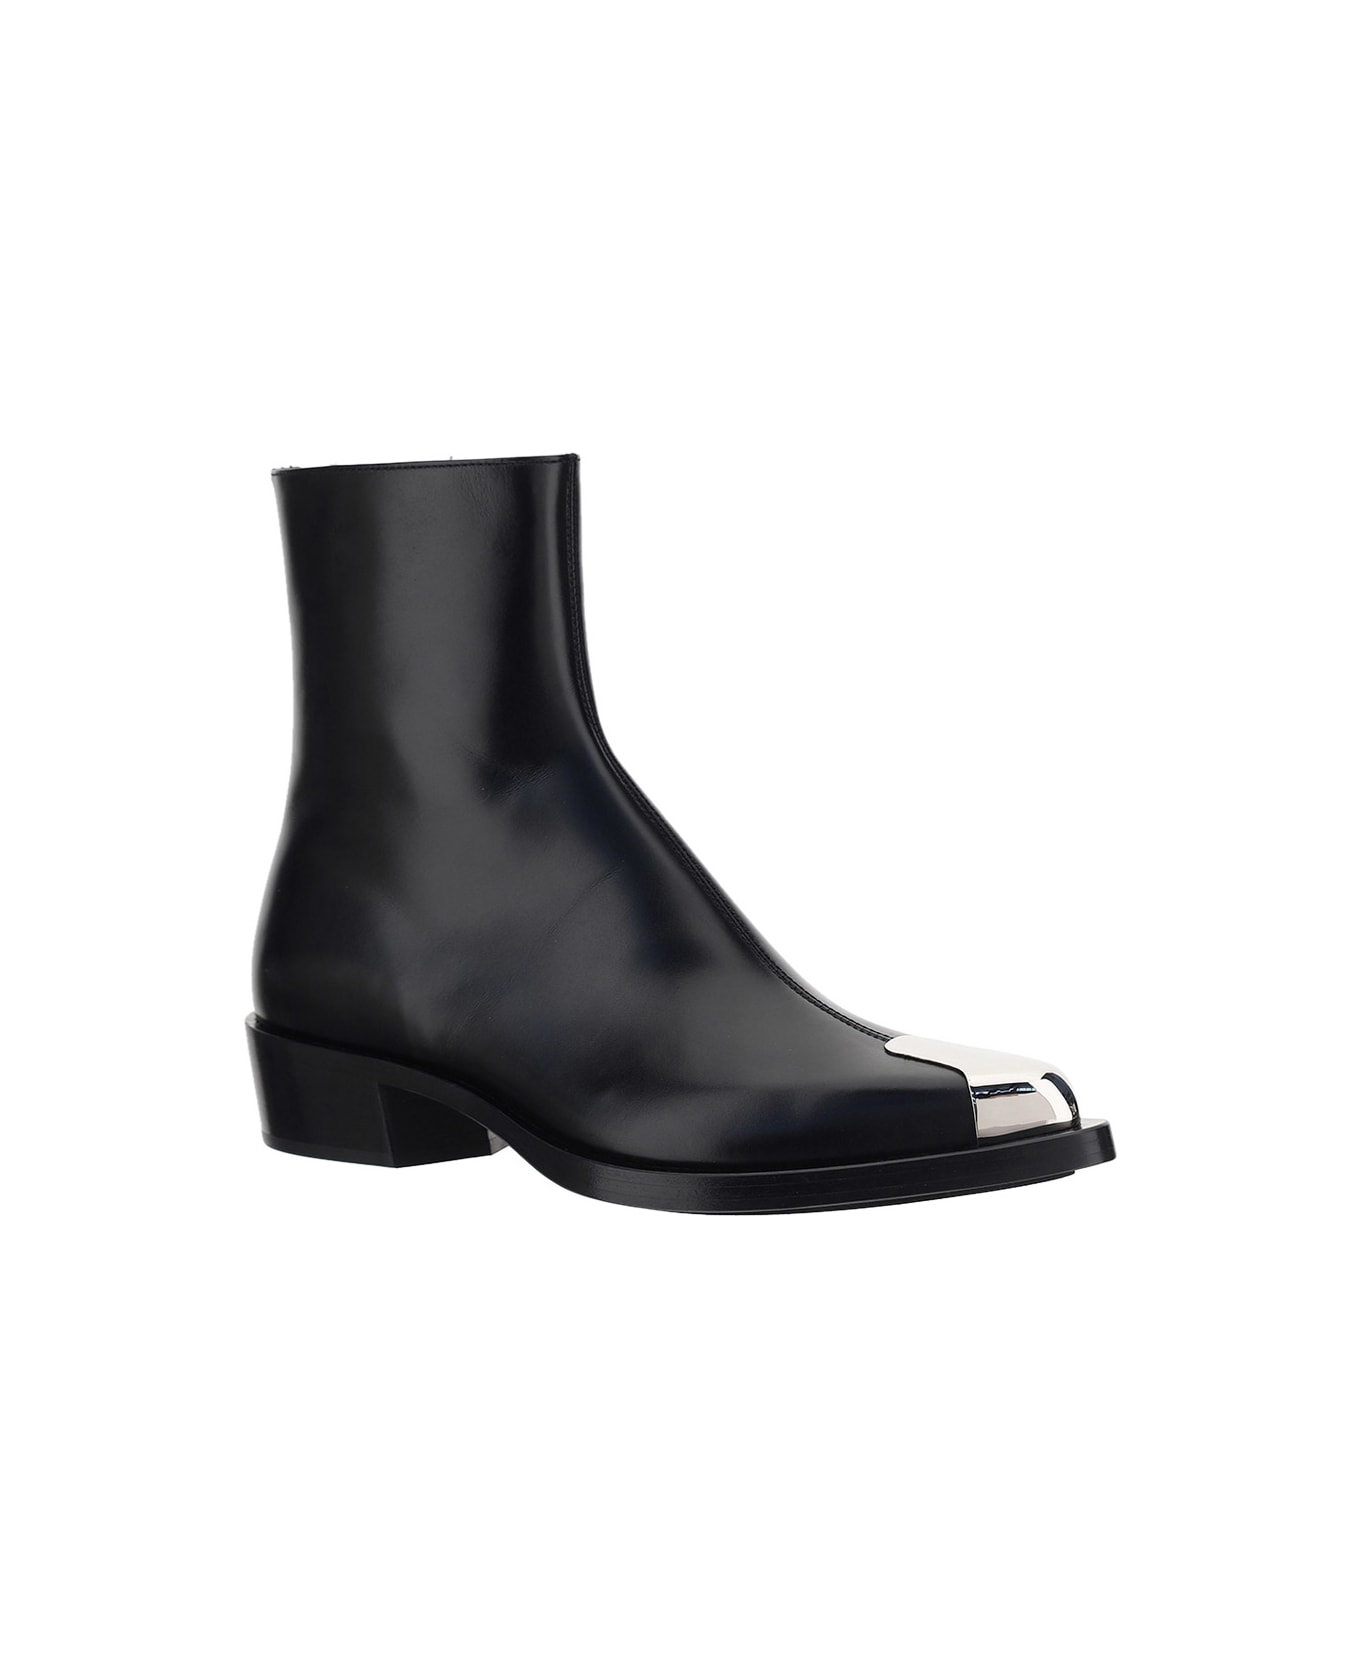 Alexander McQueen Boots - Black/silver